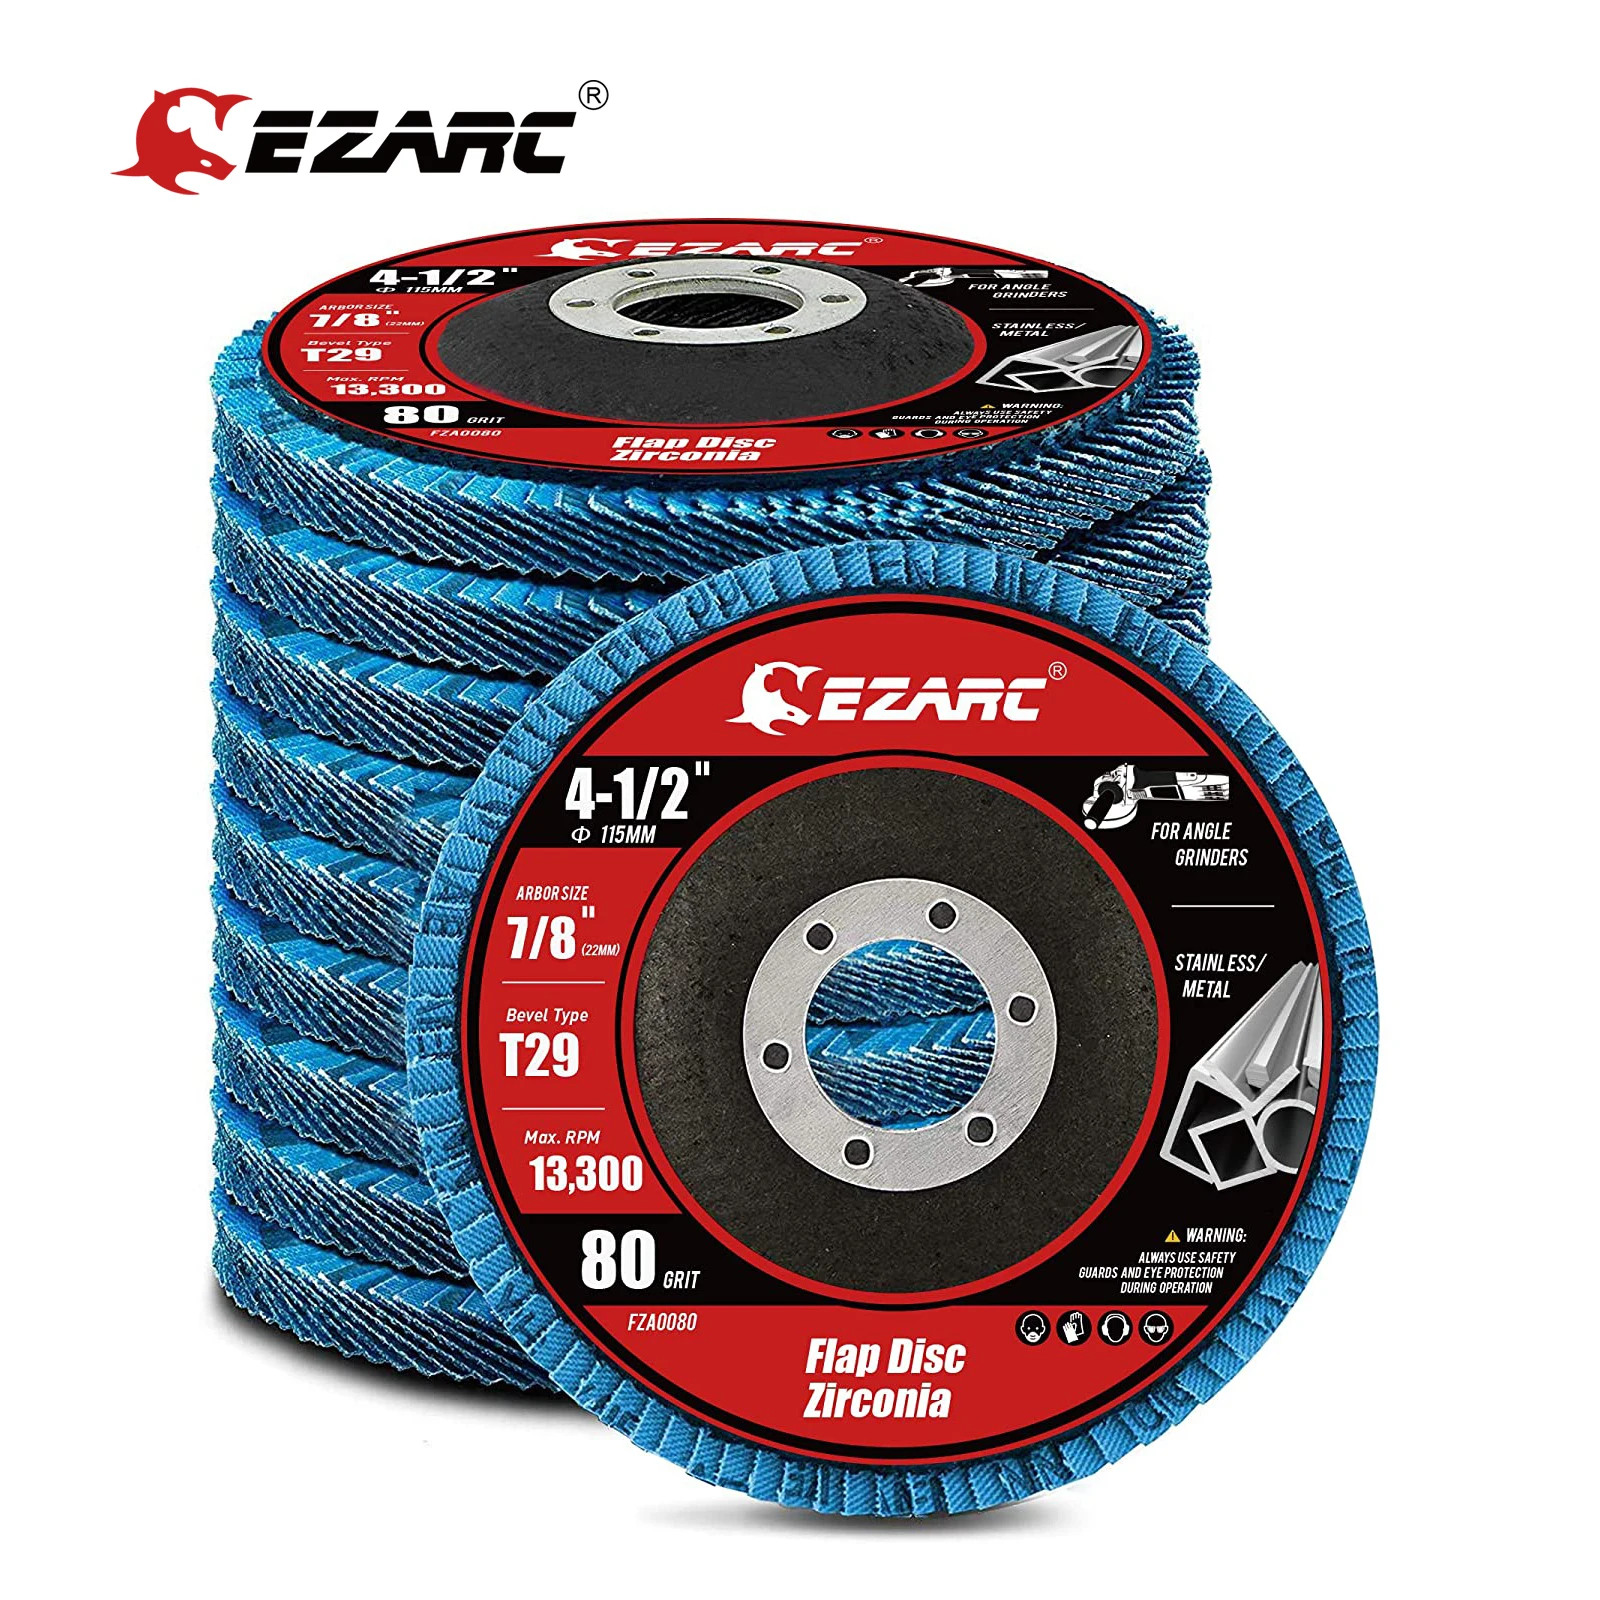 EZARC 5/10 Pcs Set Flap Discs 115mm T29 Zirconia Grinding Wheels 40/80 Grit Professional Flap Discs Sanding For Angle Grinder